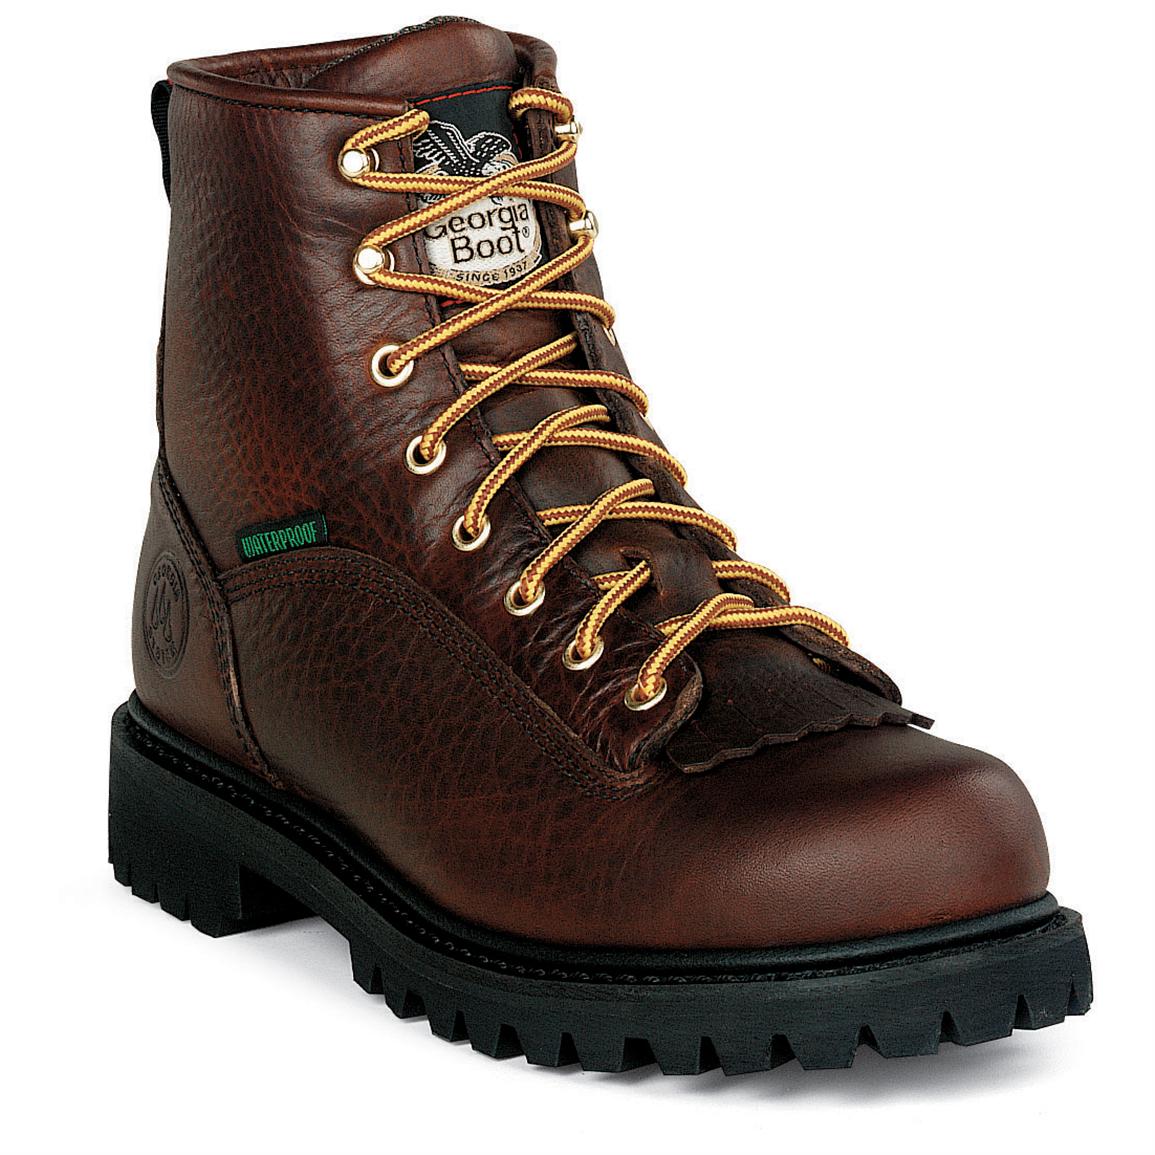 Mens Georgia® 6 Steel Toe Waterproof Low Heel Logger Boots Brown 186254 Work Boots At